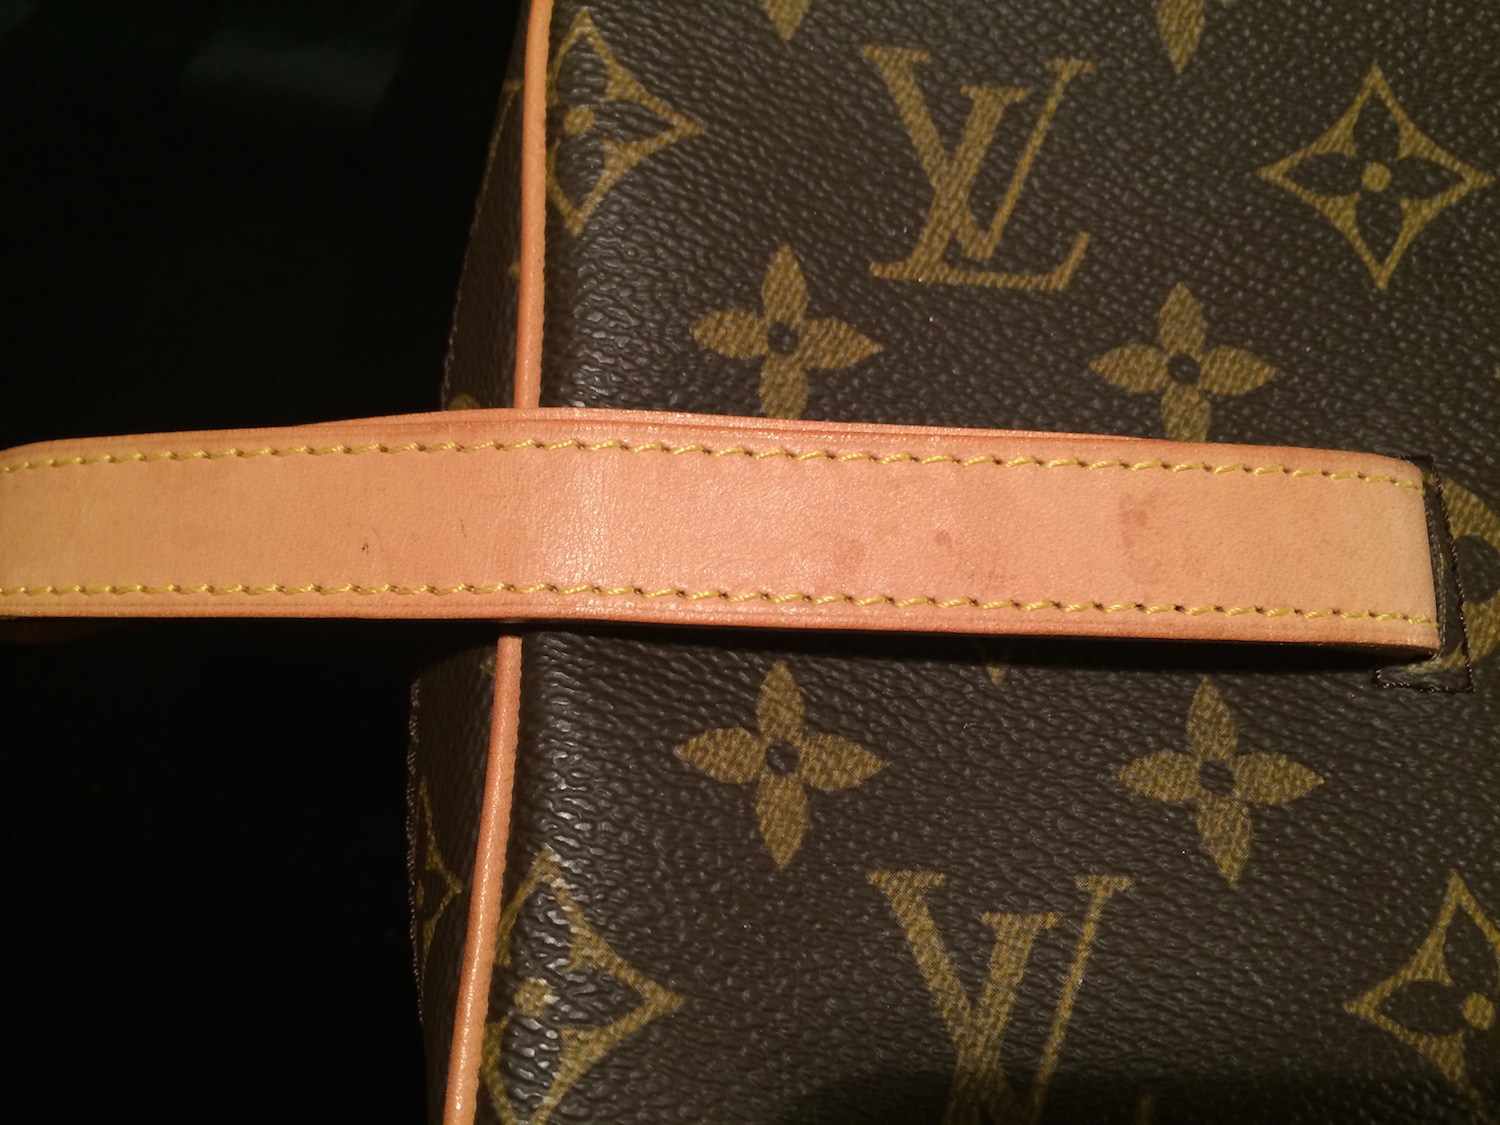 Louis Vuitton lv square bag monogram original leather version